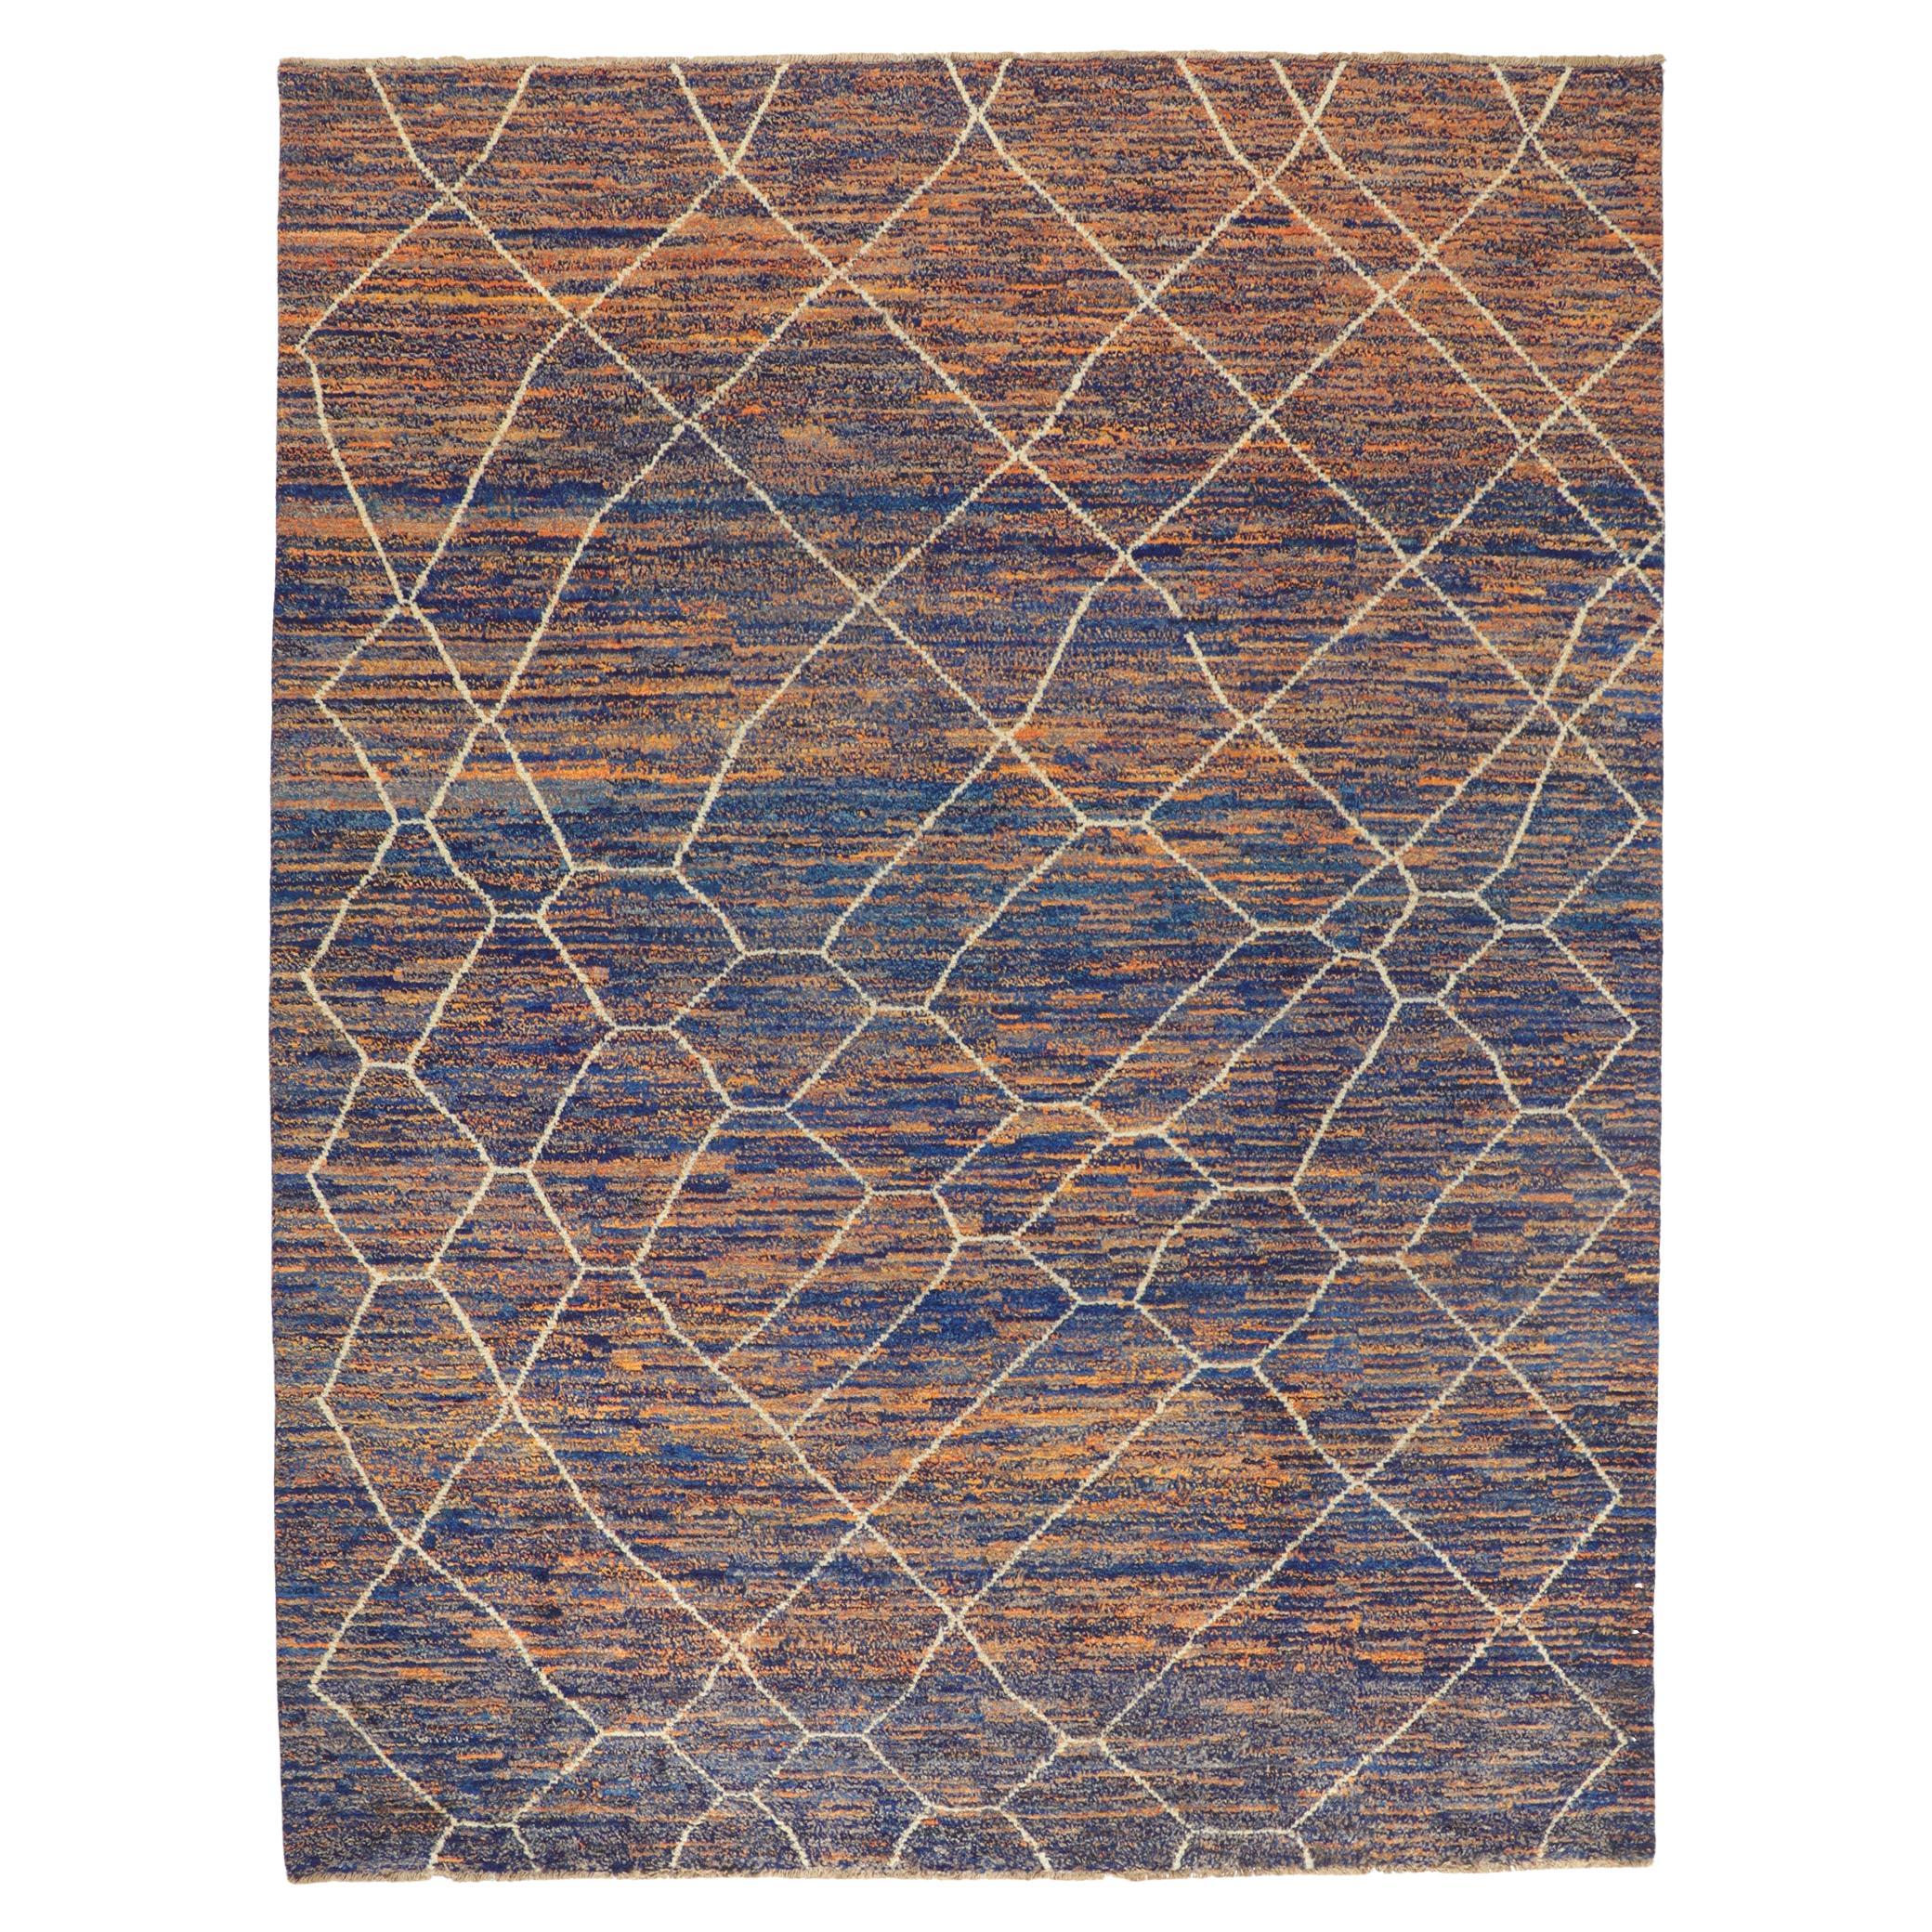 Großer abstrakter marokkanischer Teppich, neu im Angebot